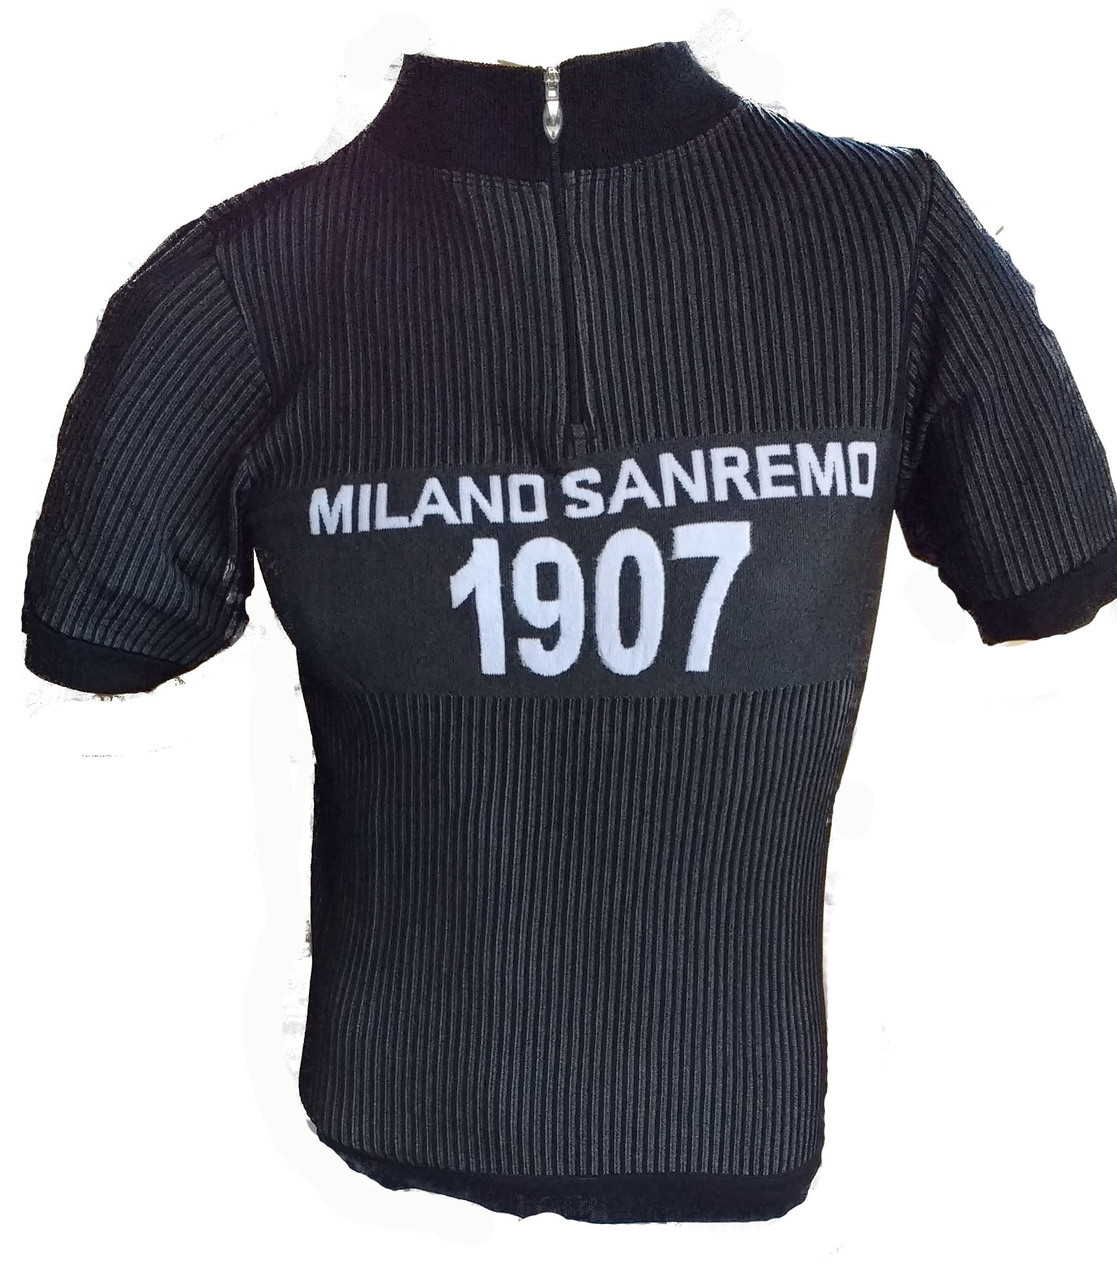 Nalini Milano San Remo TI Knit Thermocool Black Jersey Front